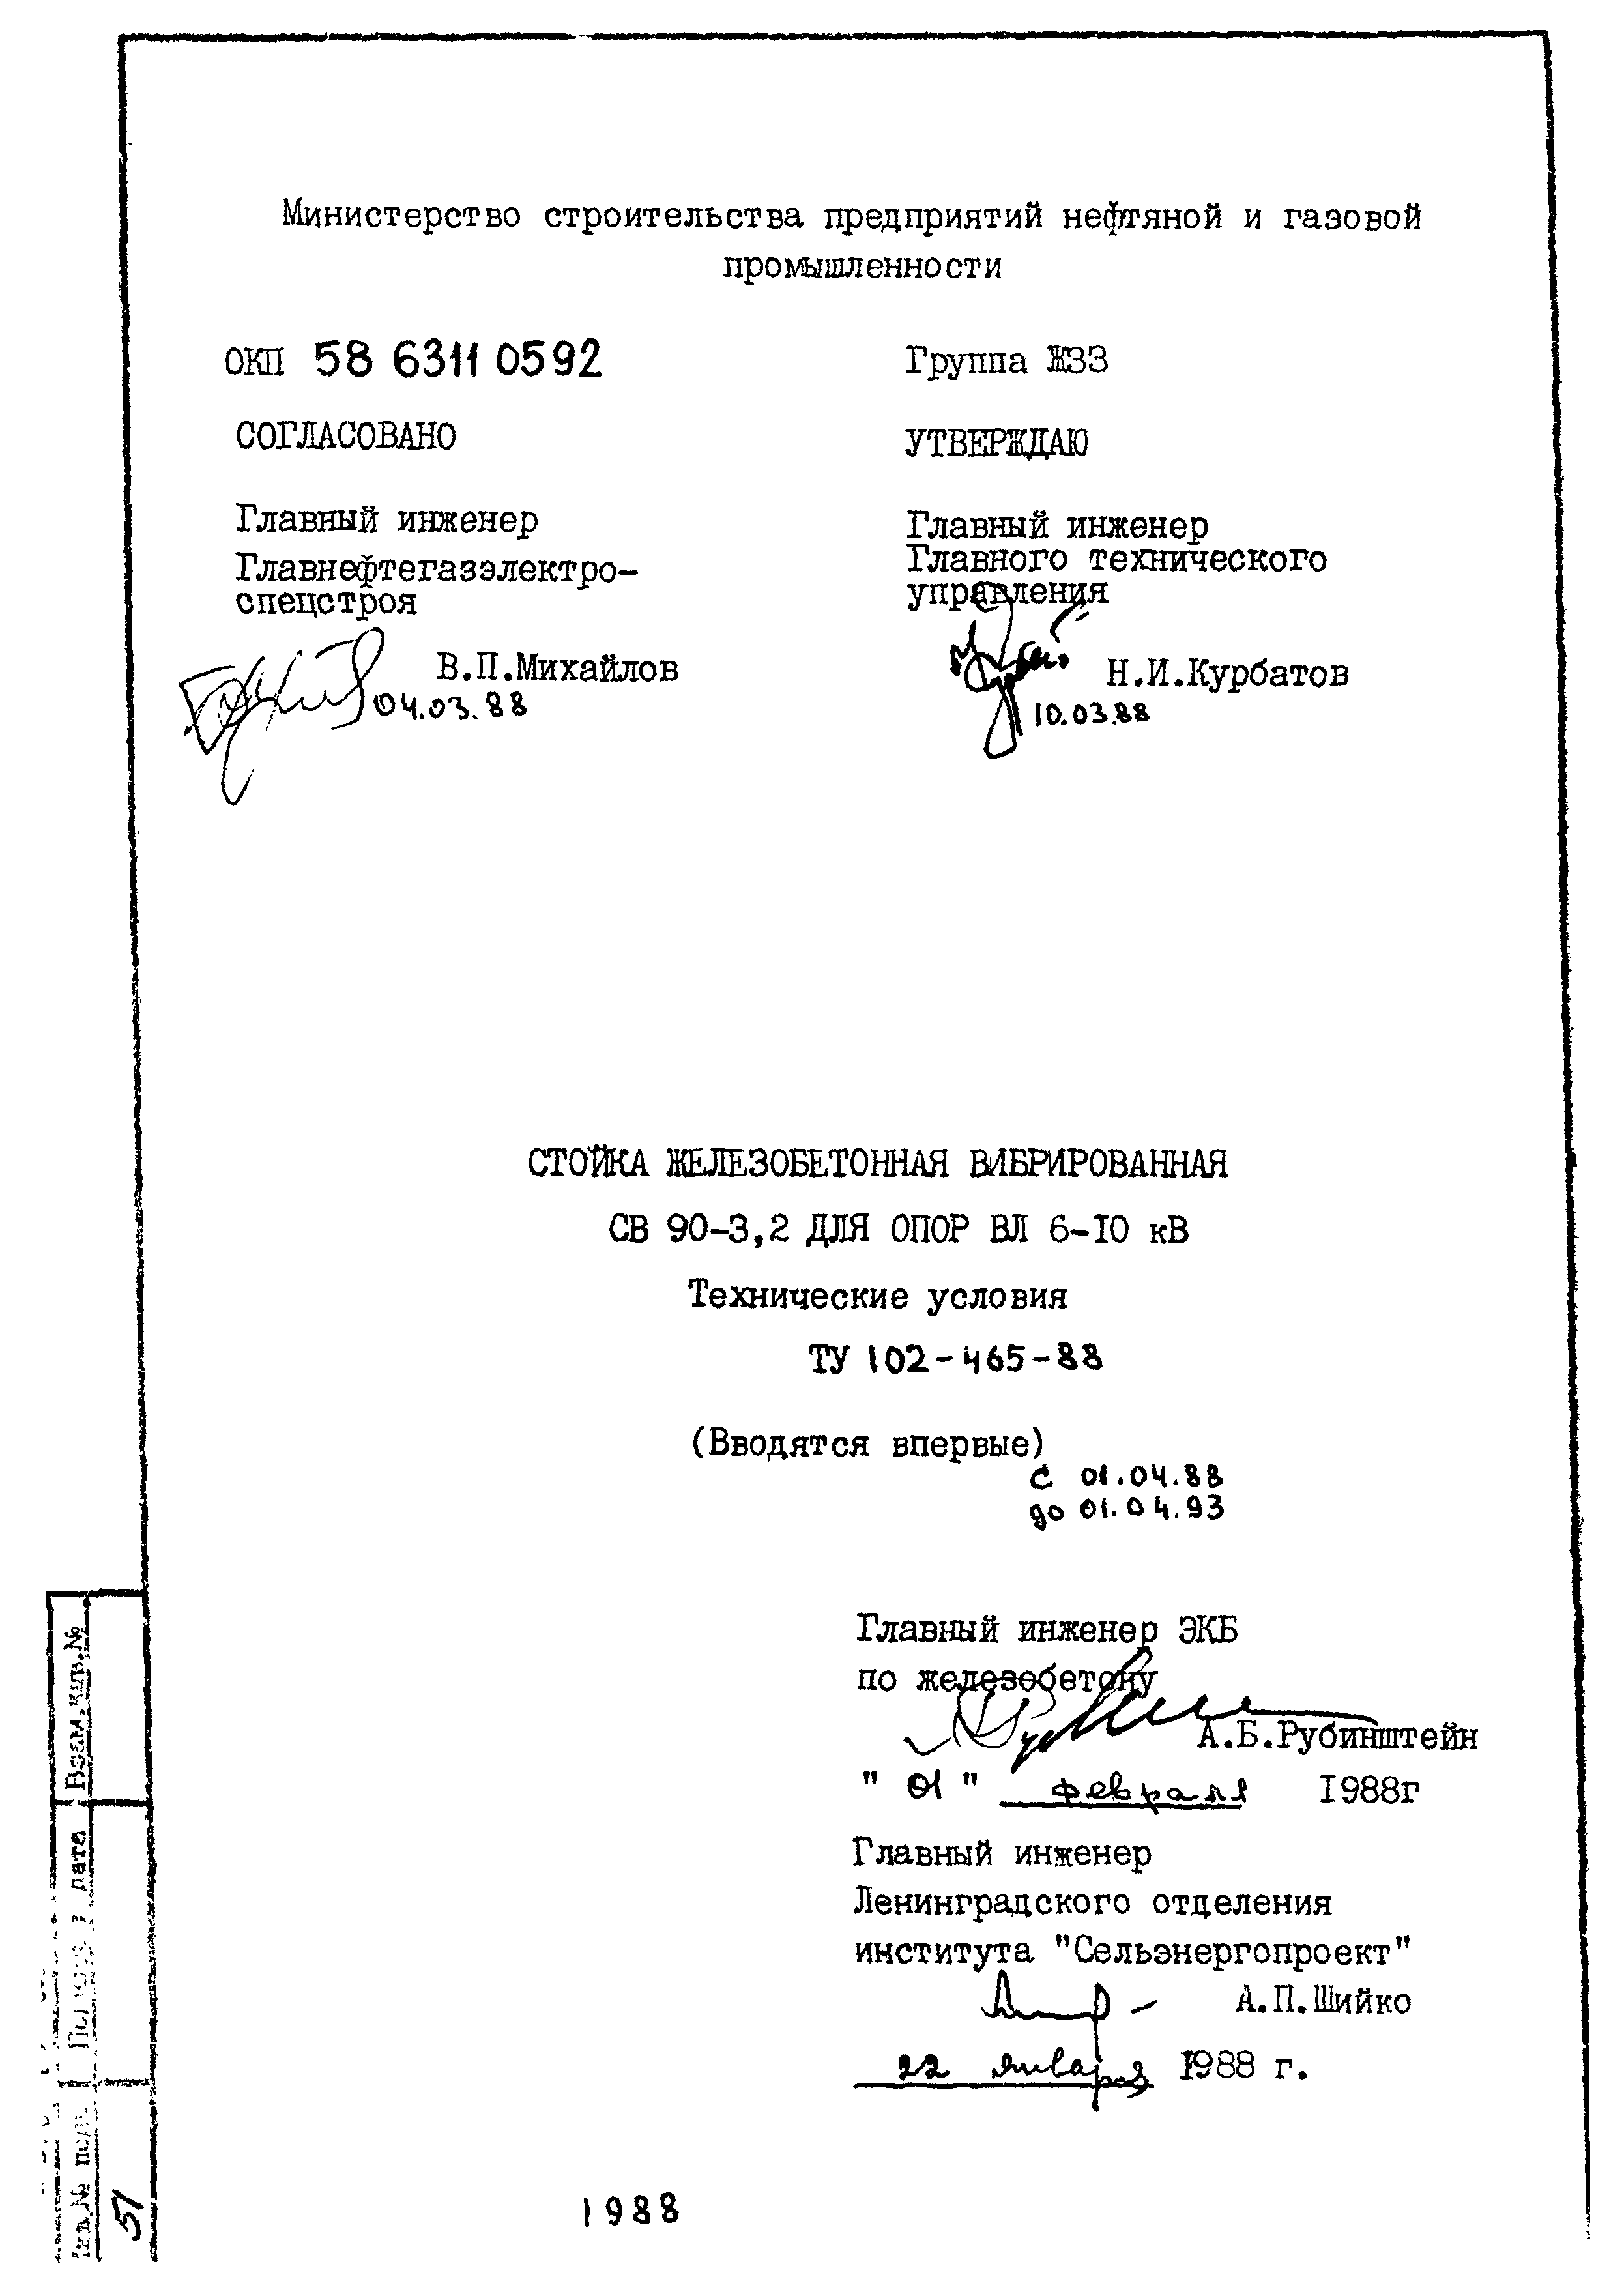 ТУ 102-465-88